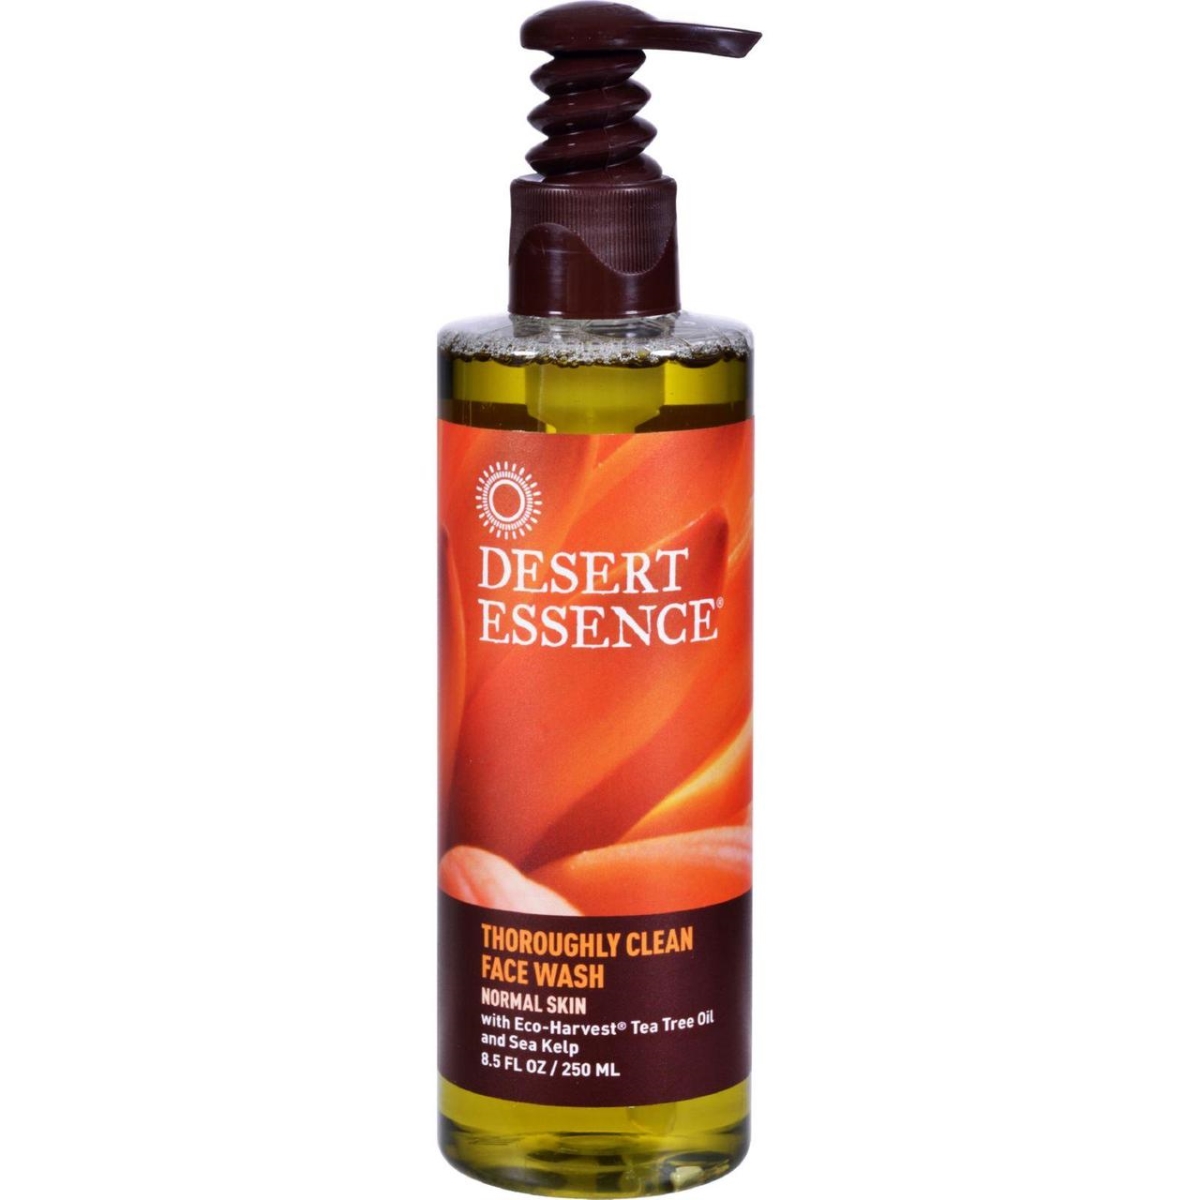 Hg0561431 8.5 Fl Oz Thoroughly Clean Face Wash With Eco Harvest Tea Tree Oil & Sea Kelp